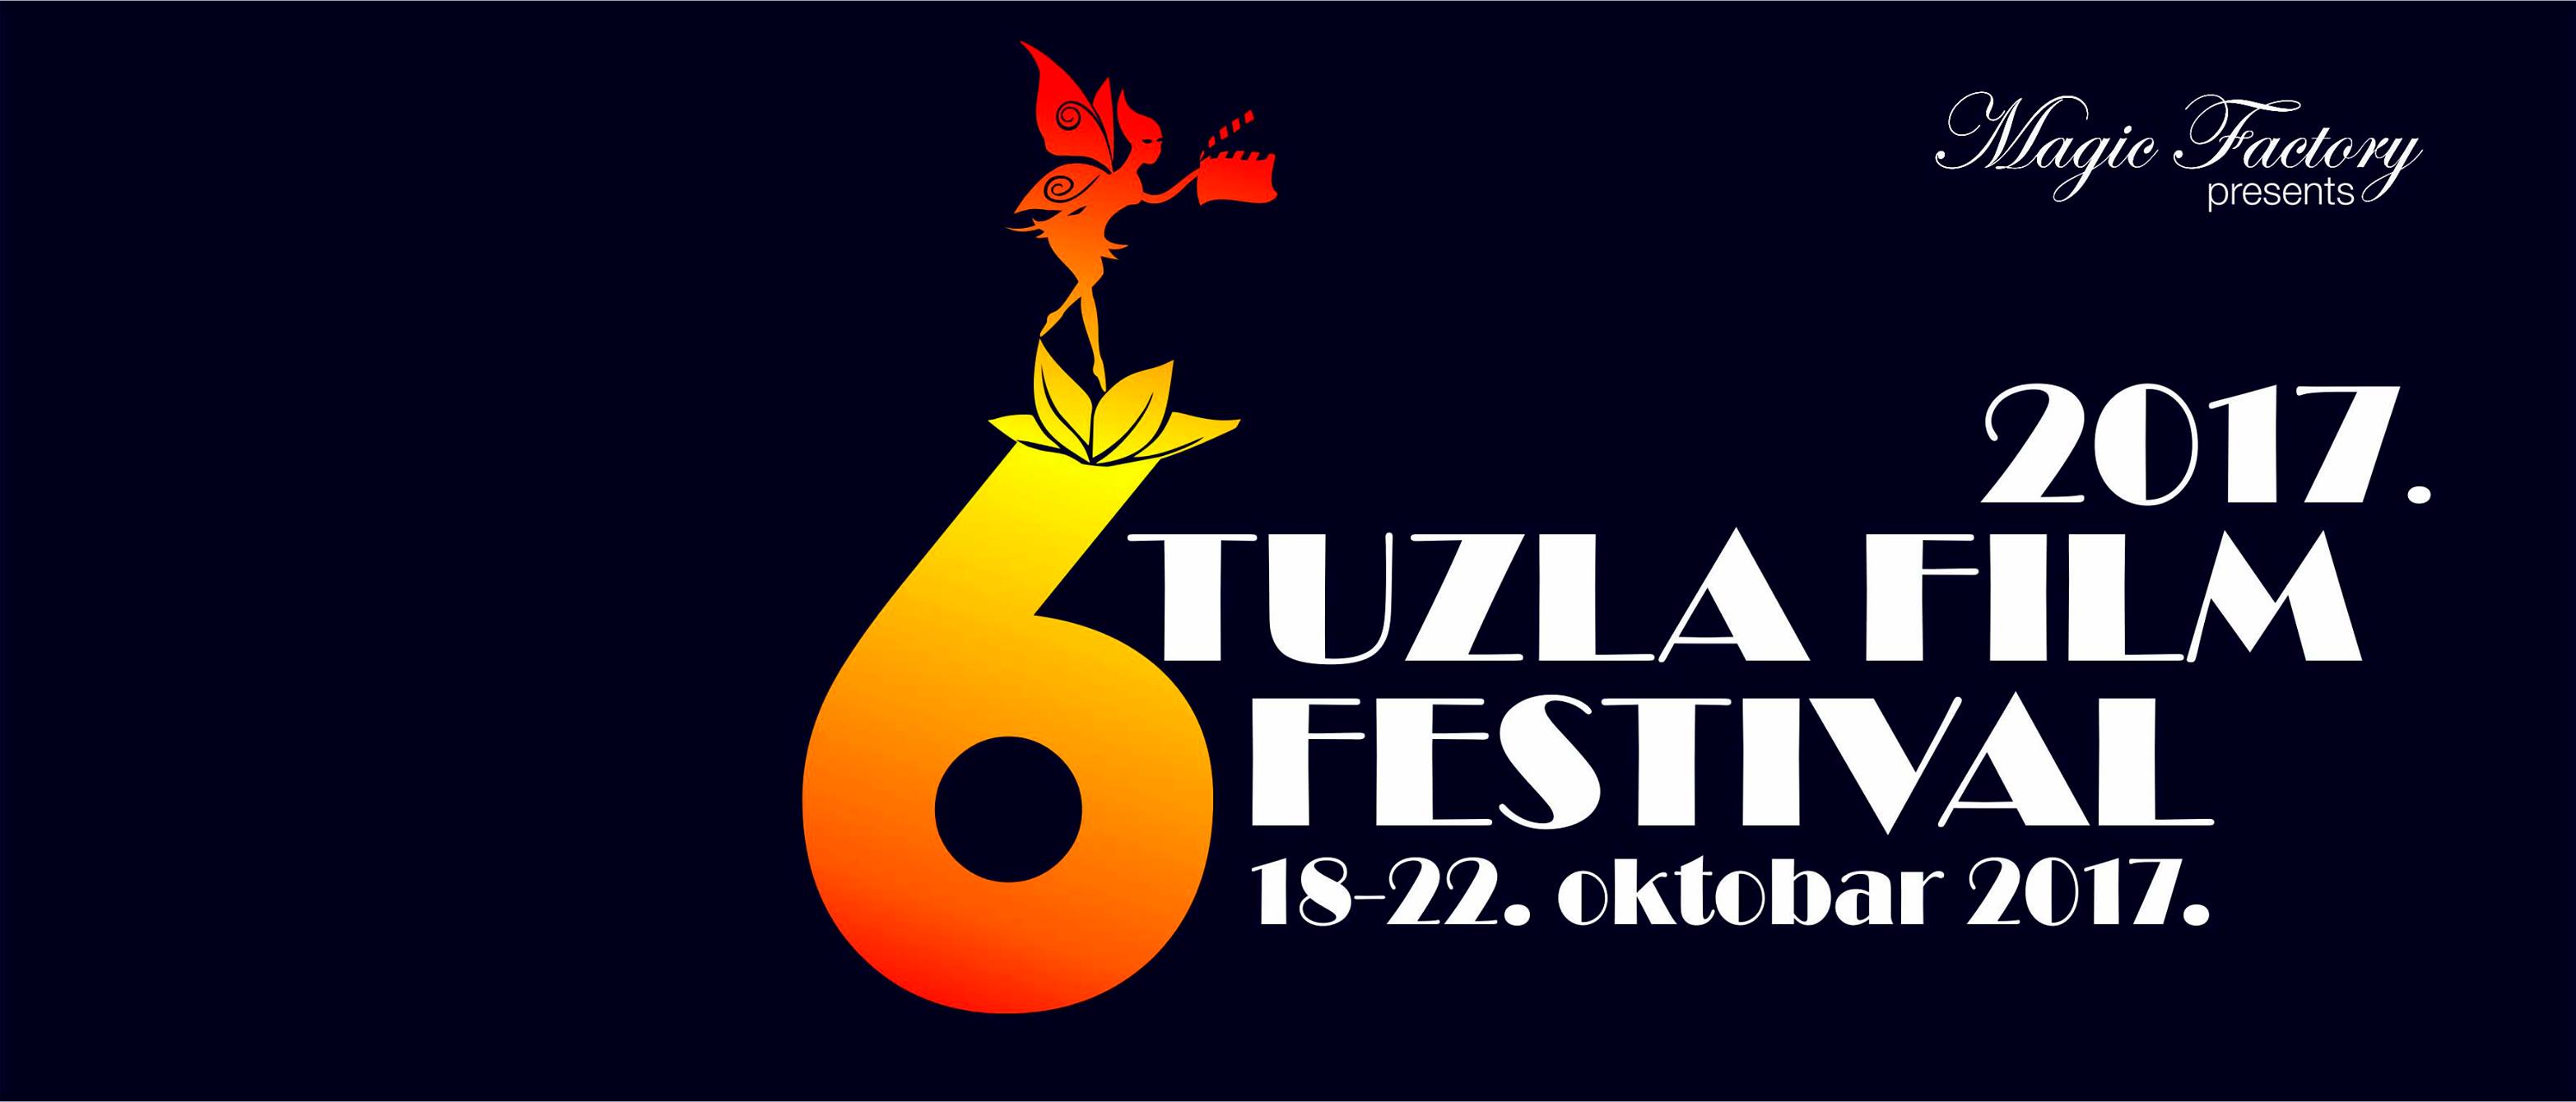 Tuzla film festival 2017